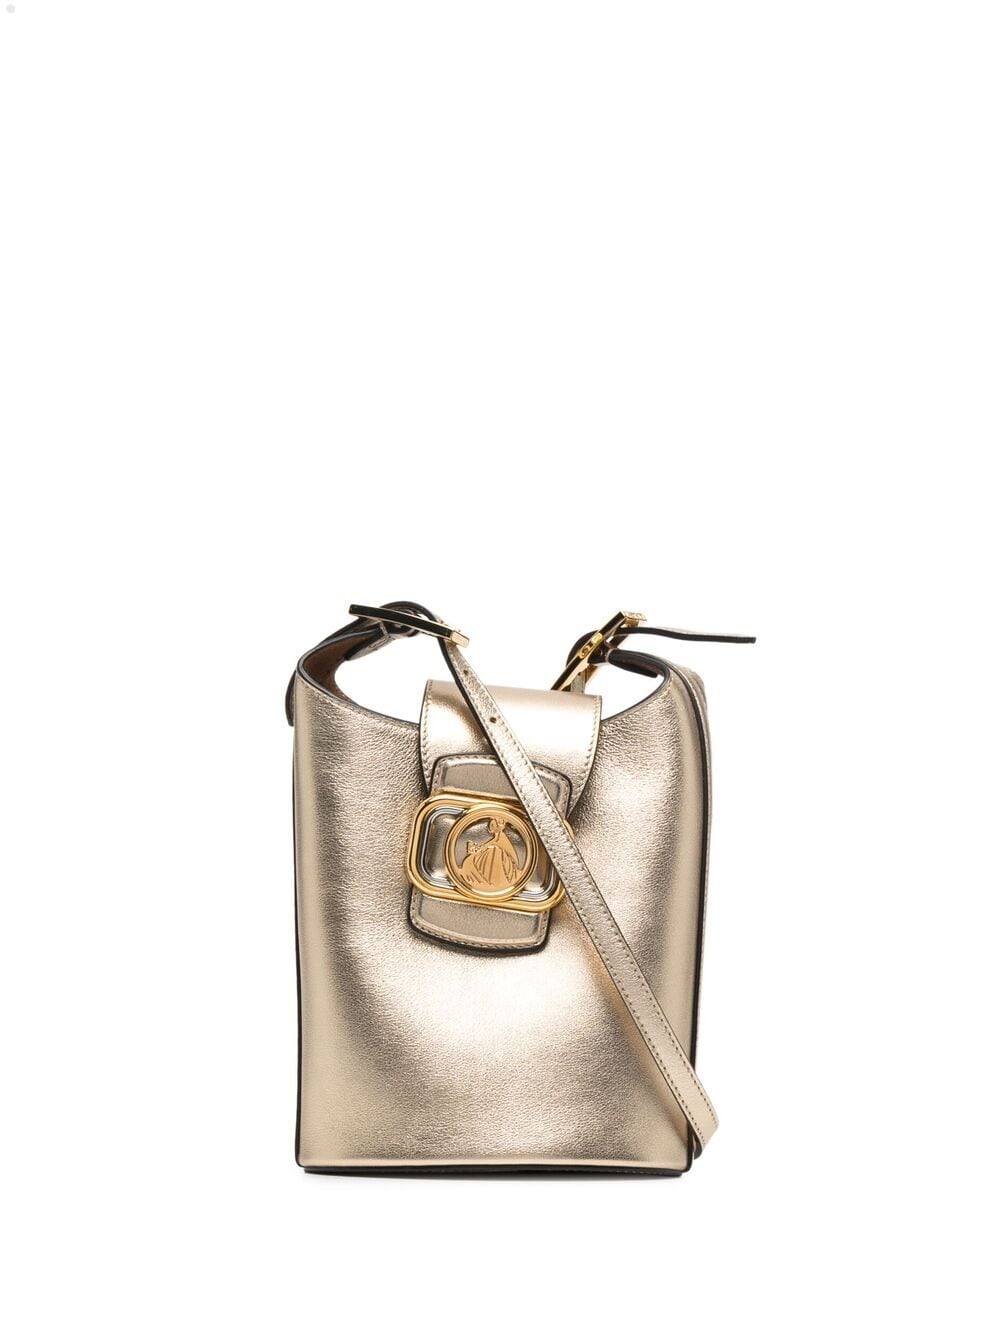 фото Lanvin сумка-ведро swan с эффектом металлик